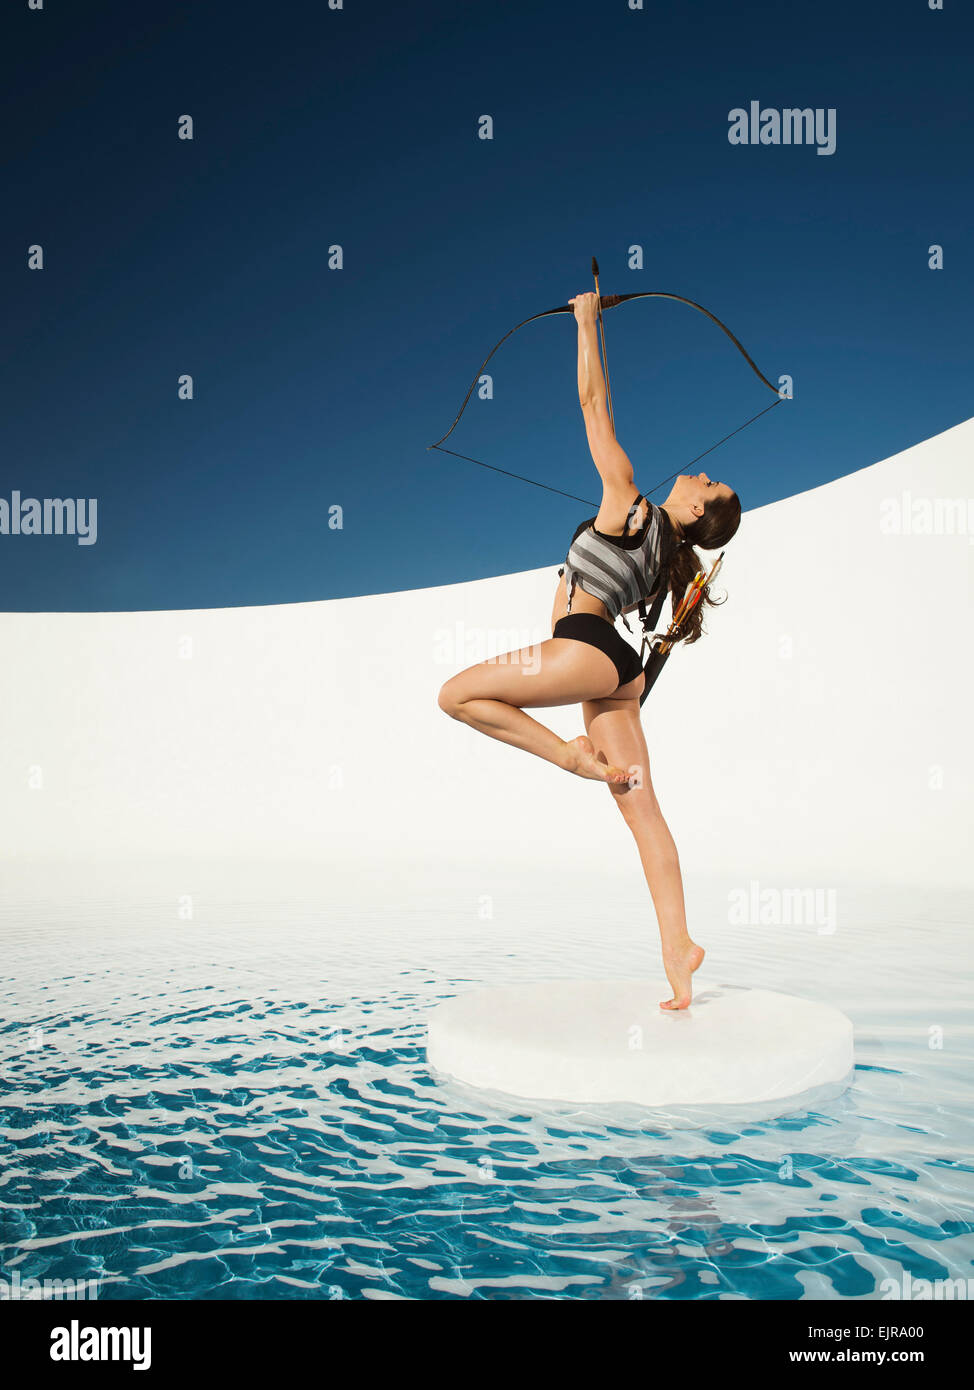 Caucasian woman aiming bow and arrow on ice floe Stock Photo